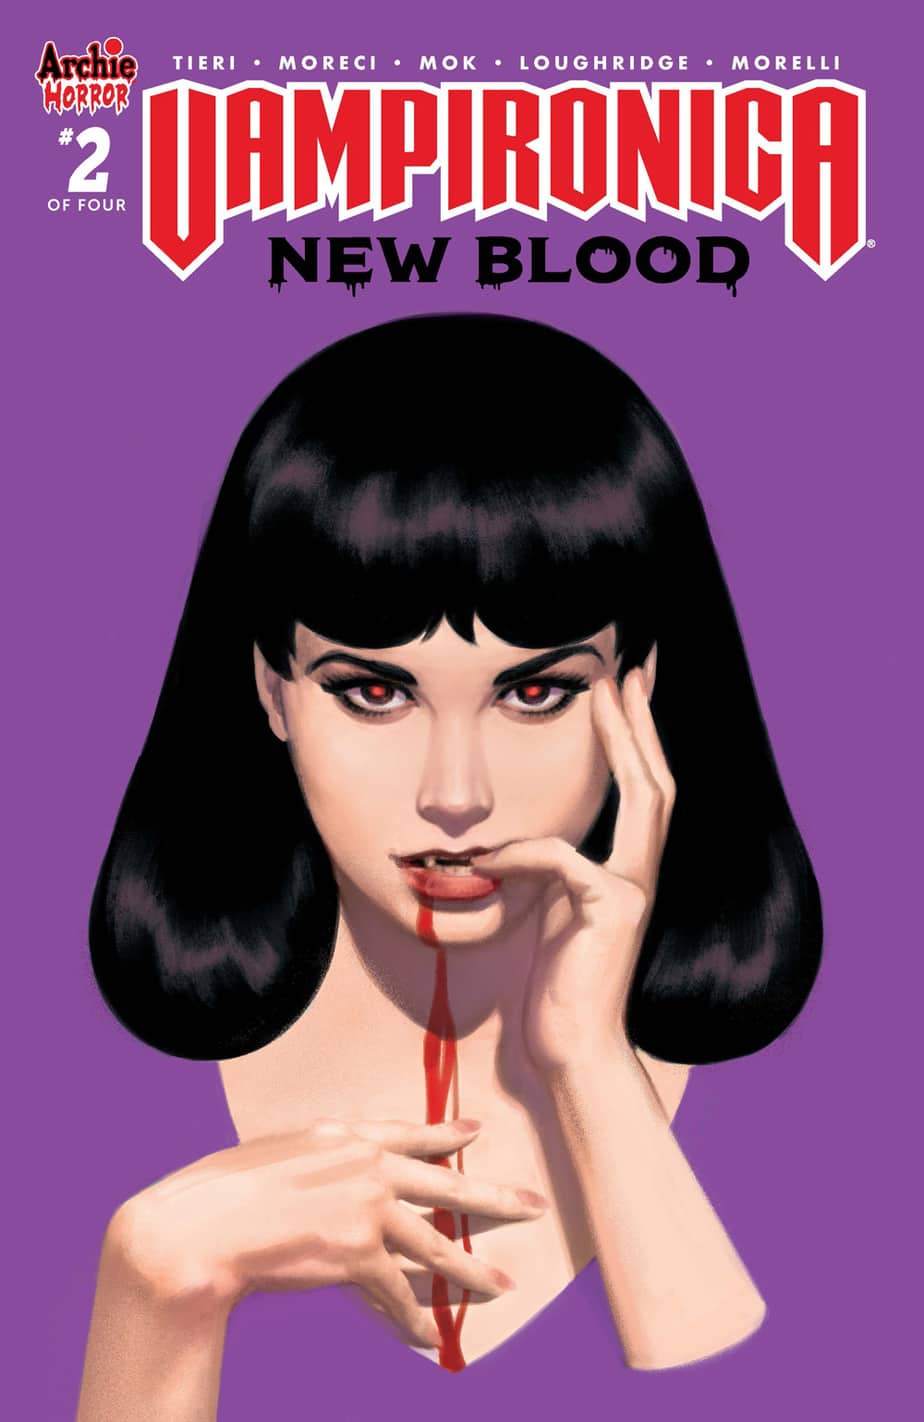 VAMPIRONICA NEW BLOOD #2